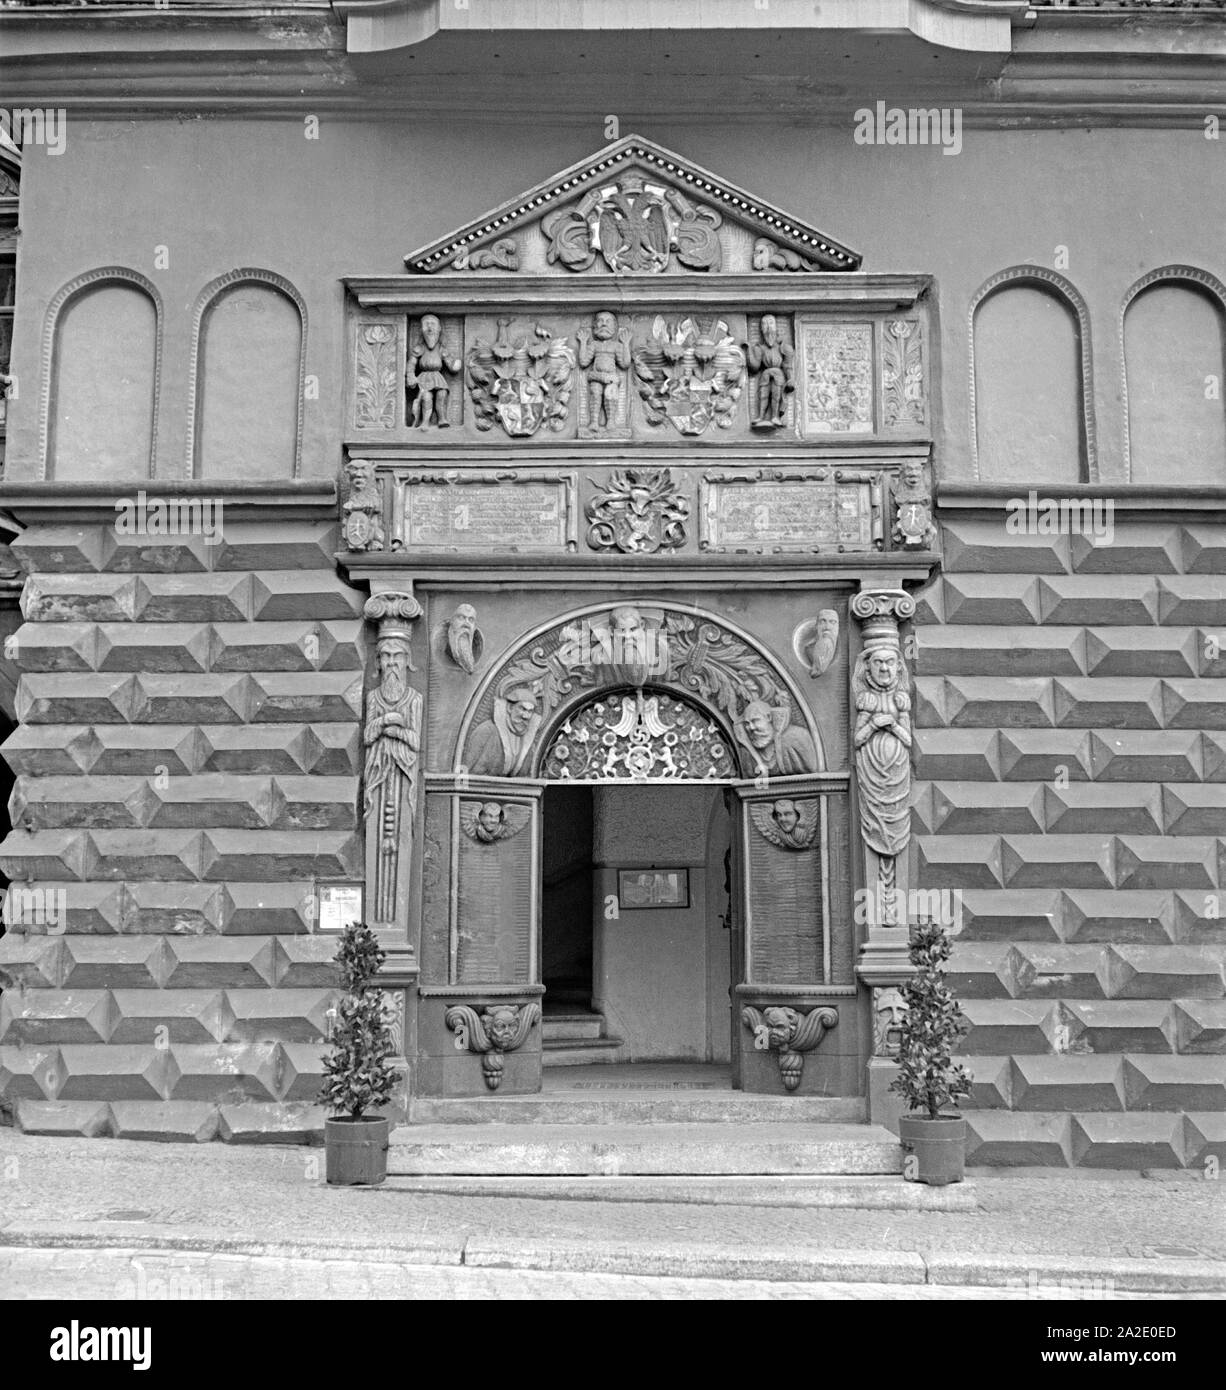 Das Rathausportal in der Stadt Gera, Deutschland 1930er Jahre. The entrance to the city hall of Gera, Germany 1930s. Stock Photo